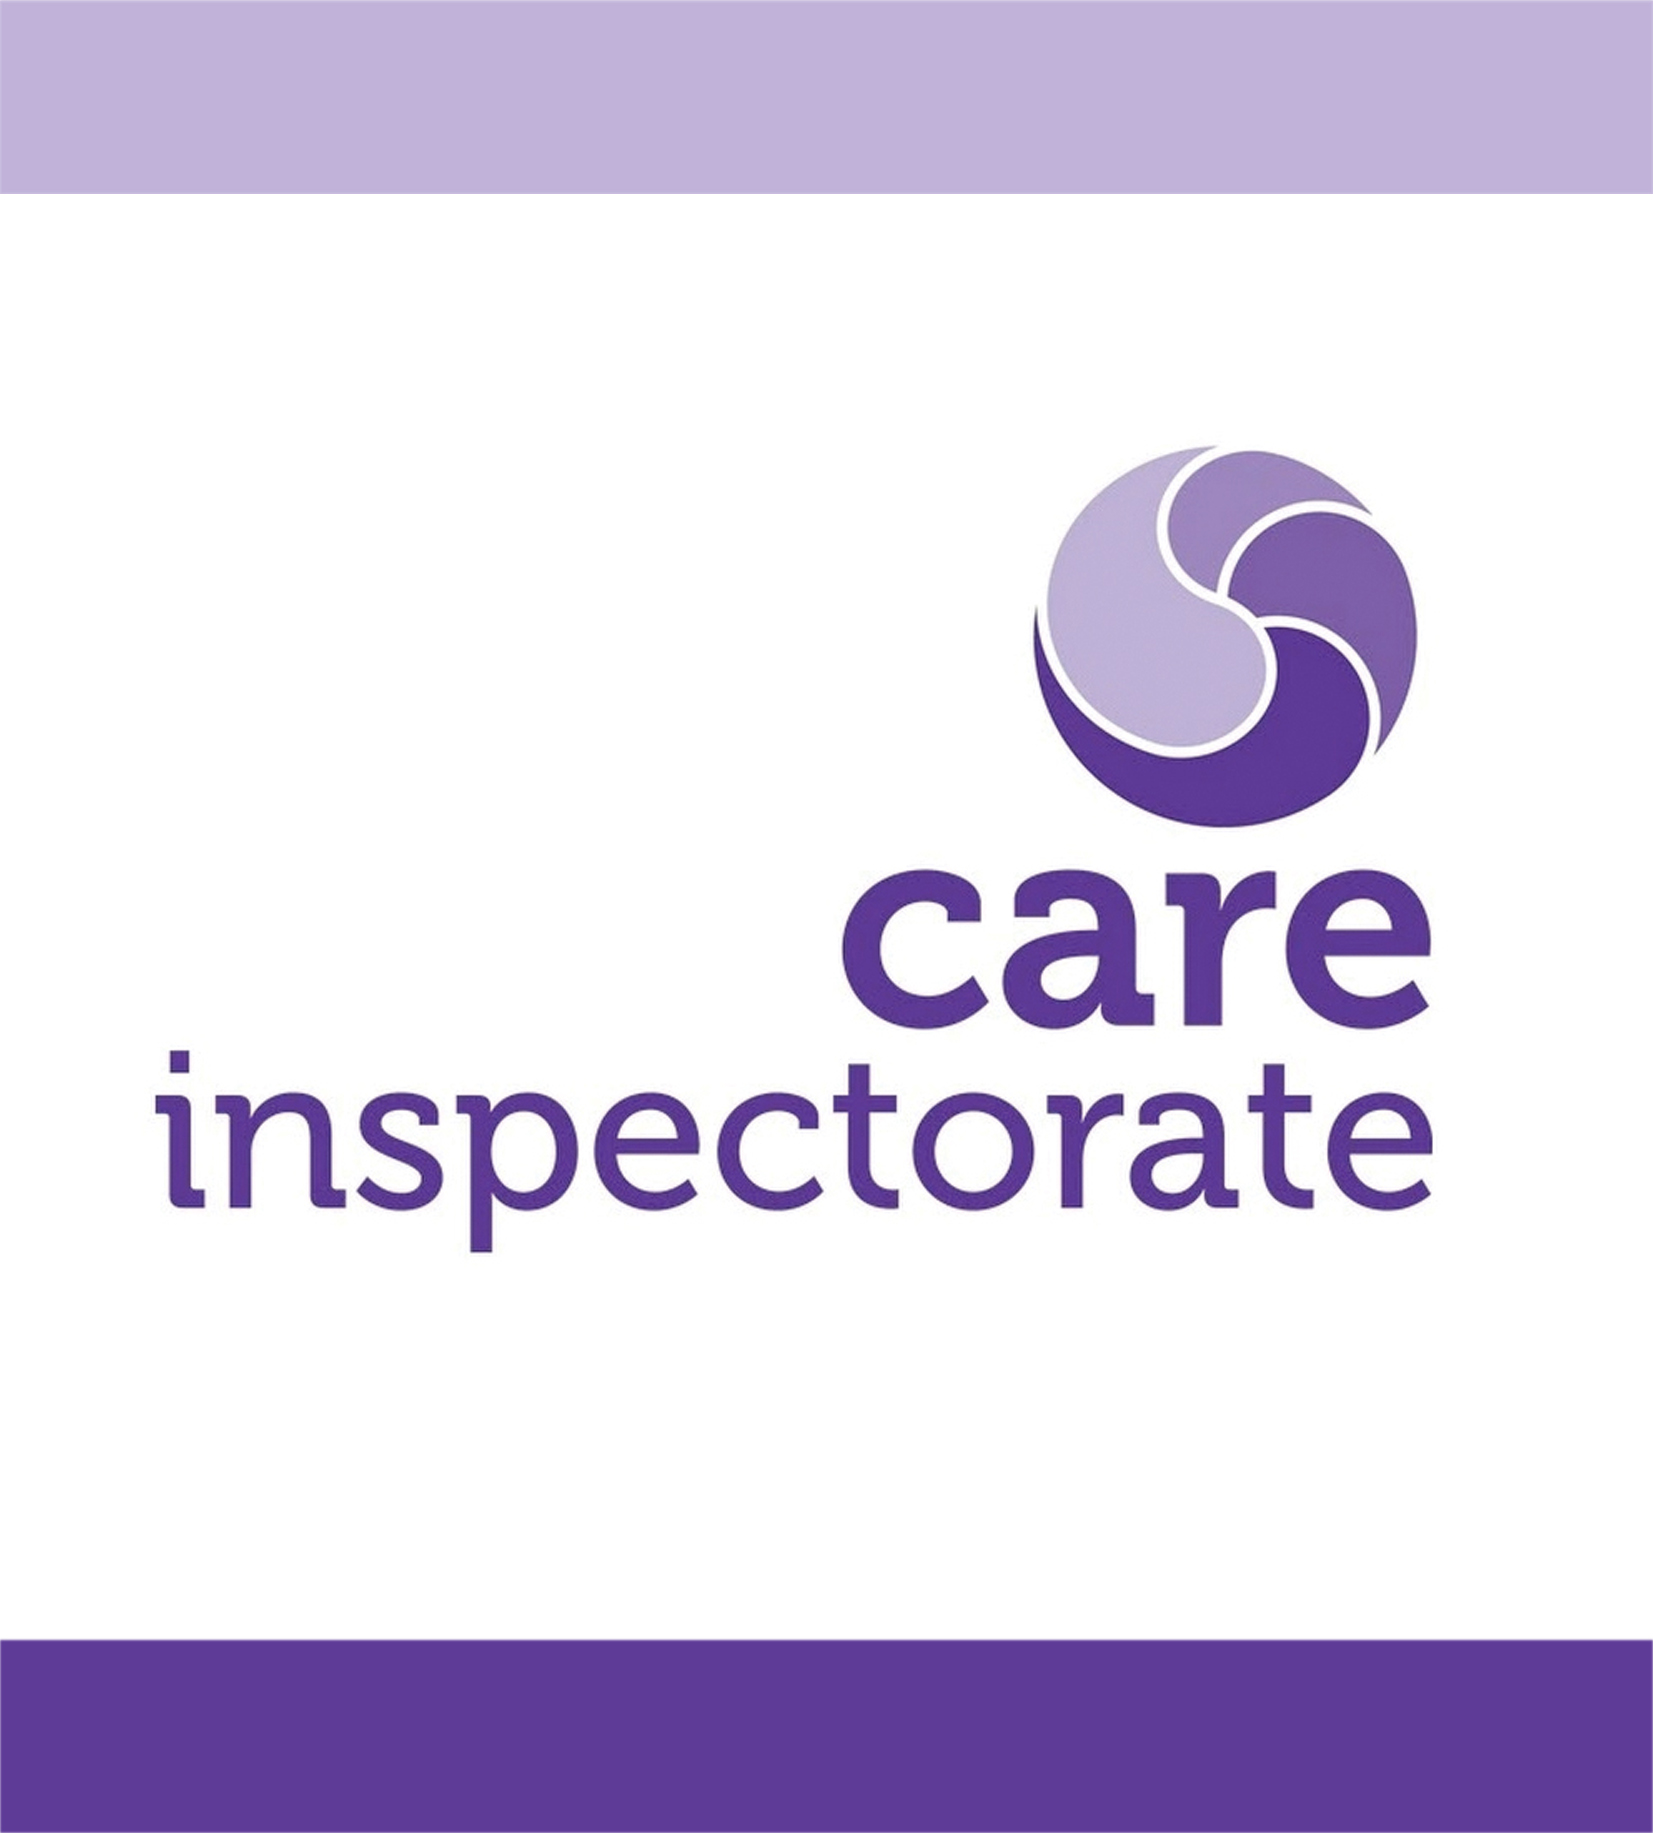 Care Inspectorate Report